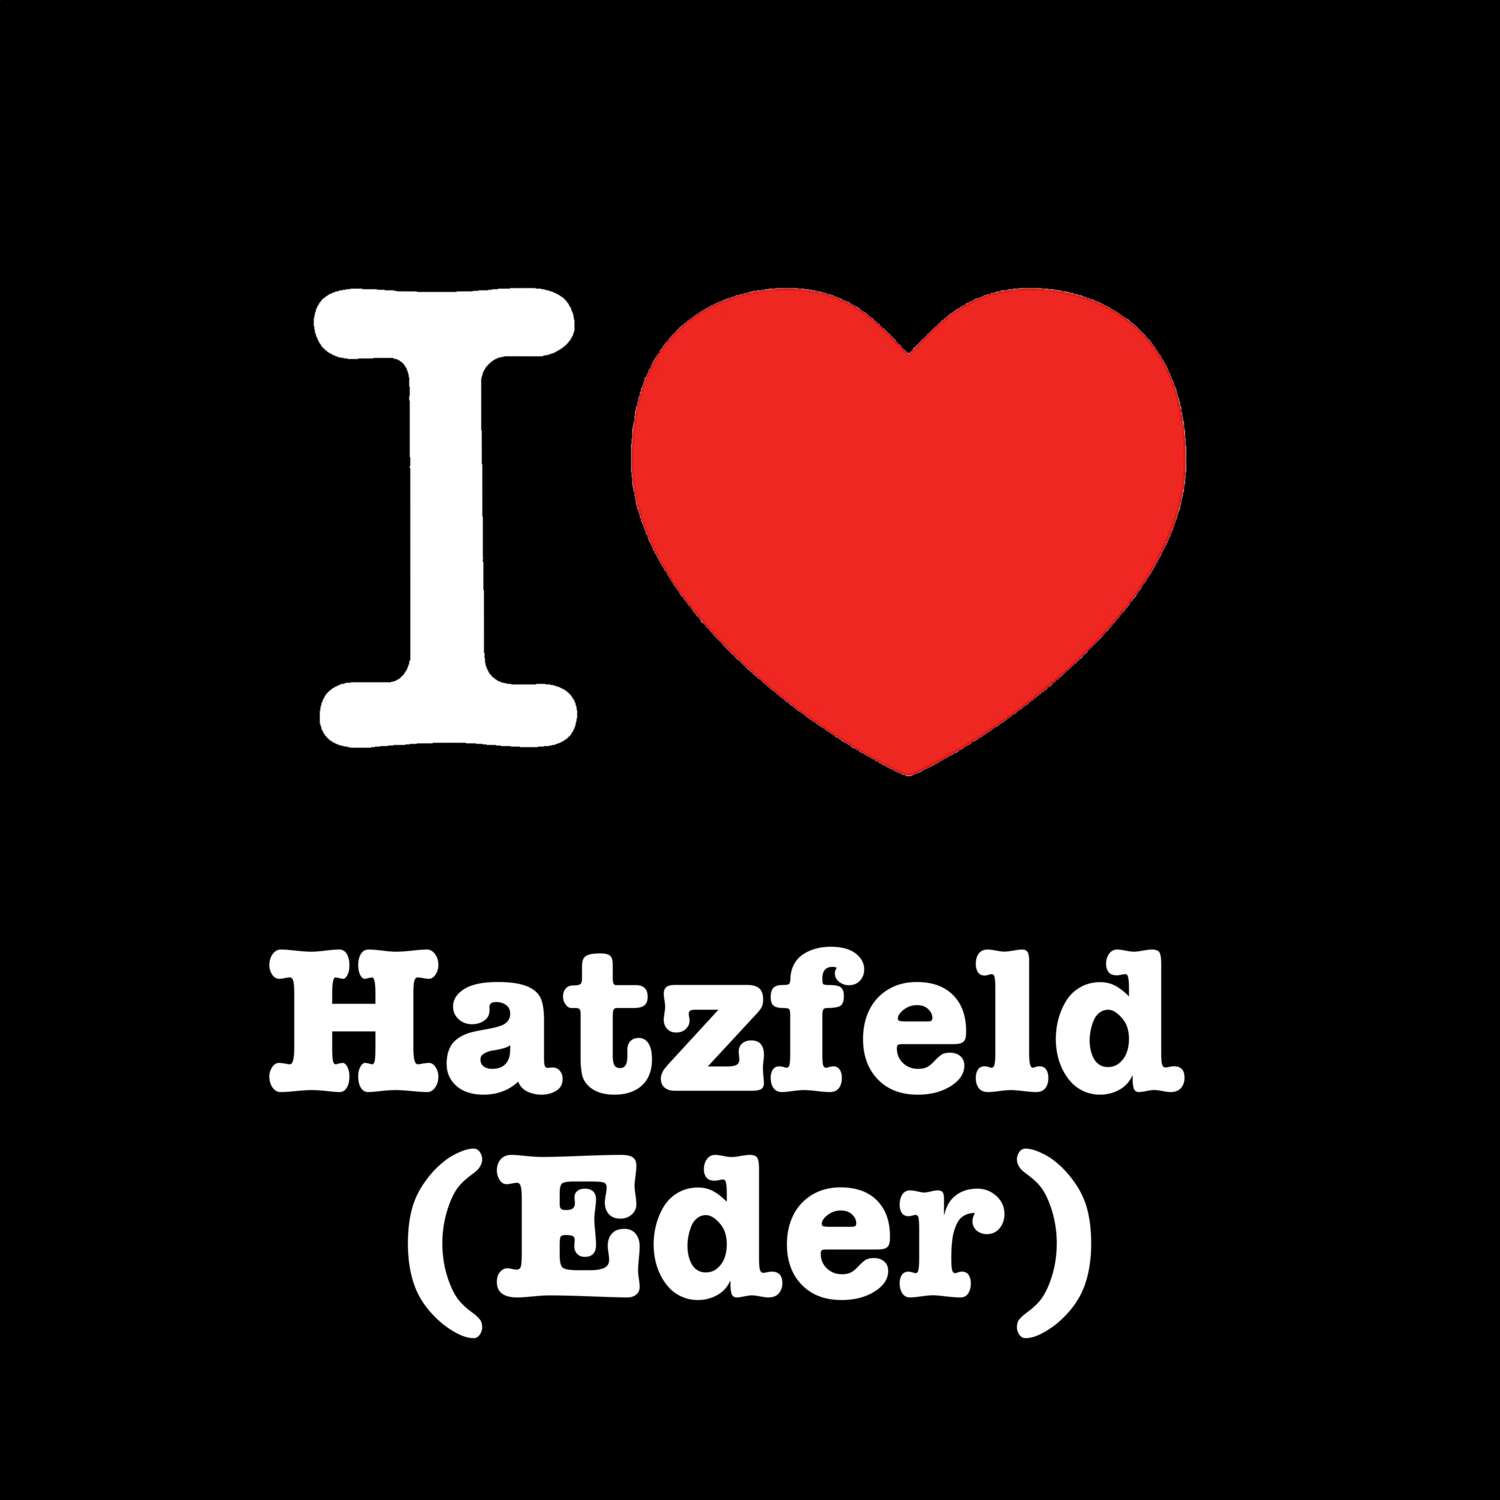 Hatzfeld (Eder) T-Shirt »I love«